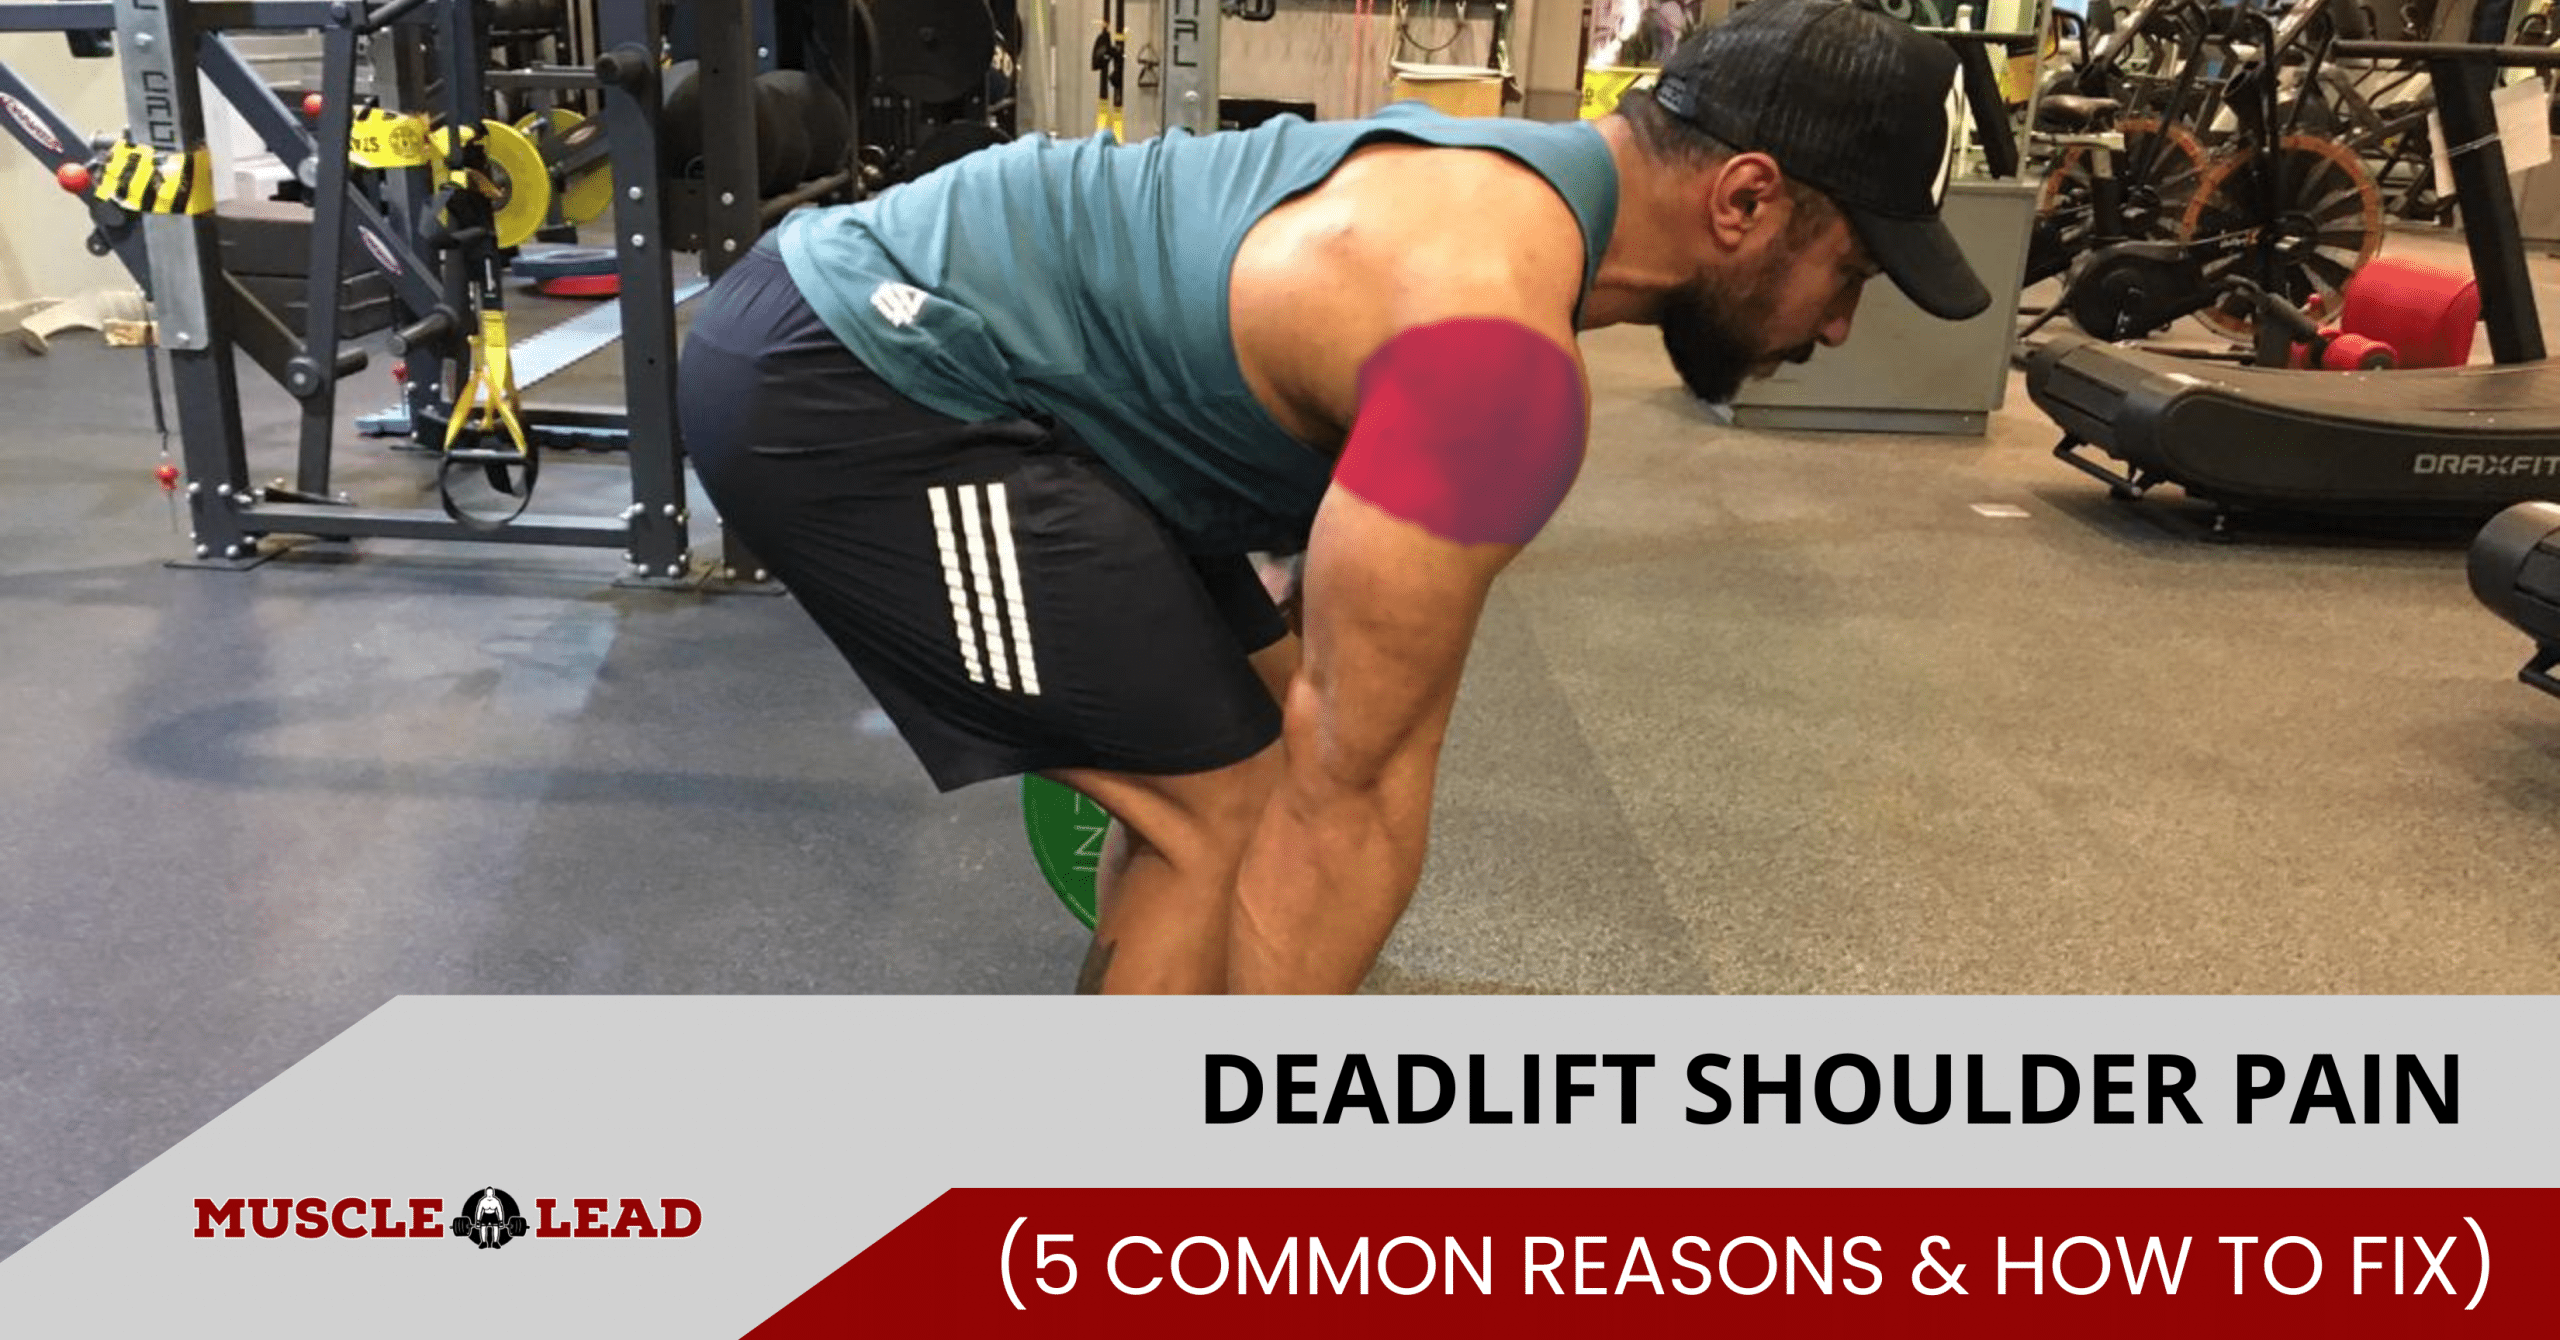 Deadlift Shoulder Pain 5 Common Reasons & How to Fix